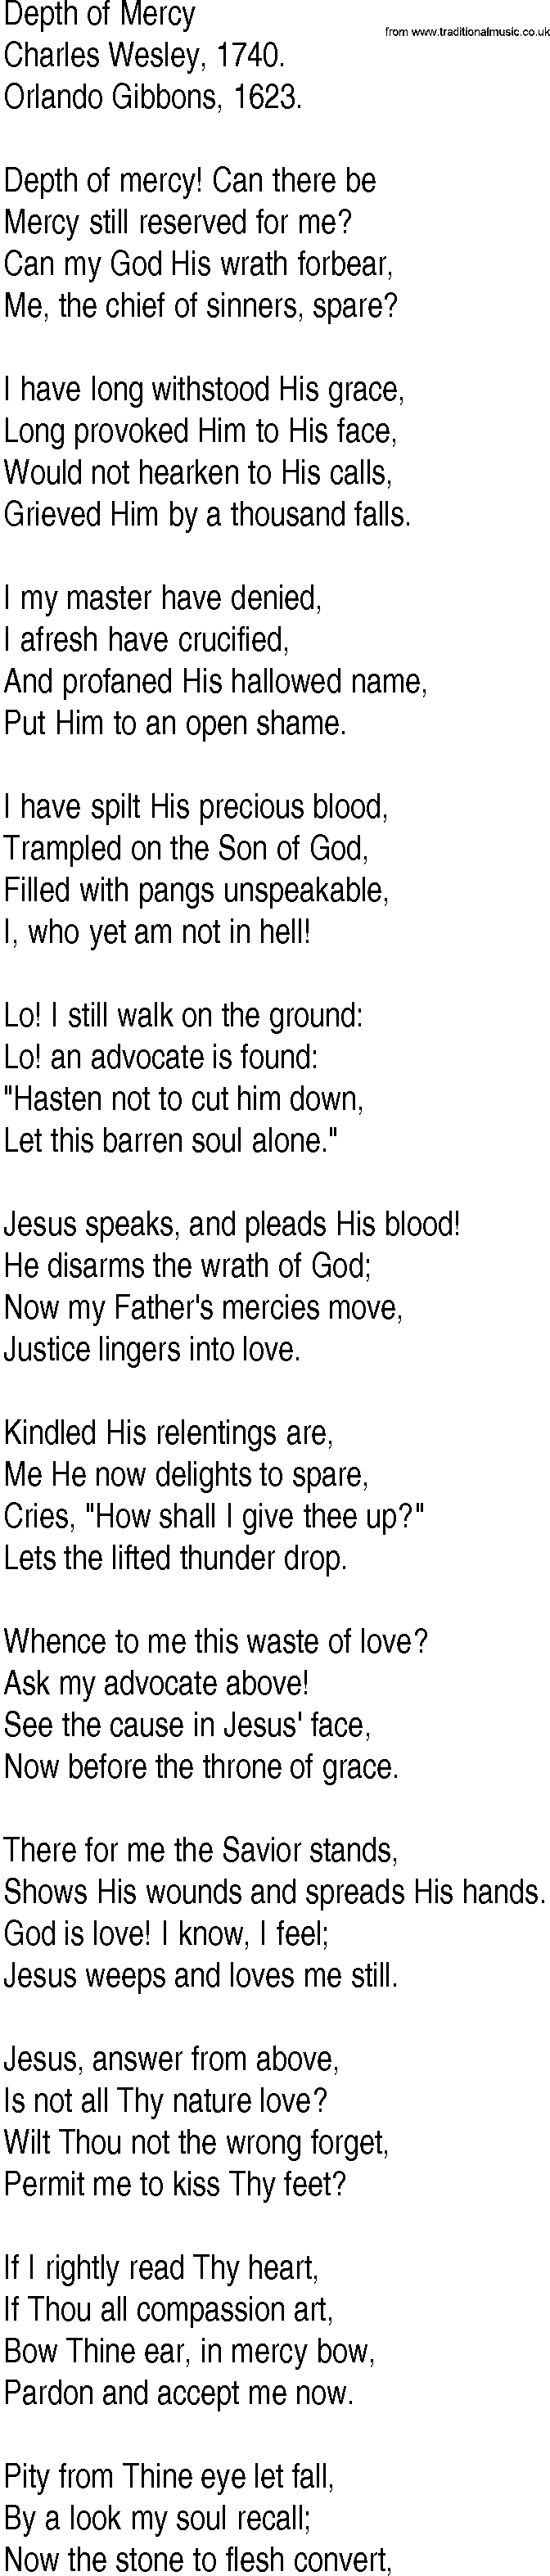 Hymn and Gospel Song: Depth of Mercy by Charles Wesley lyrics